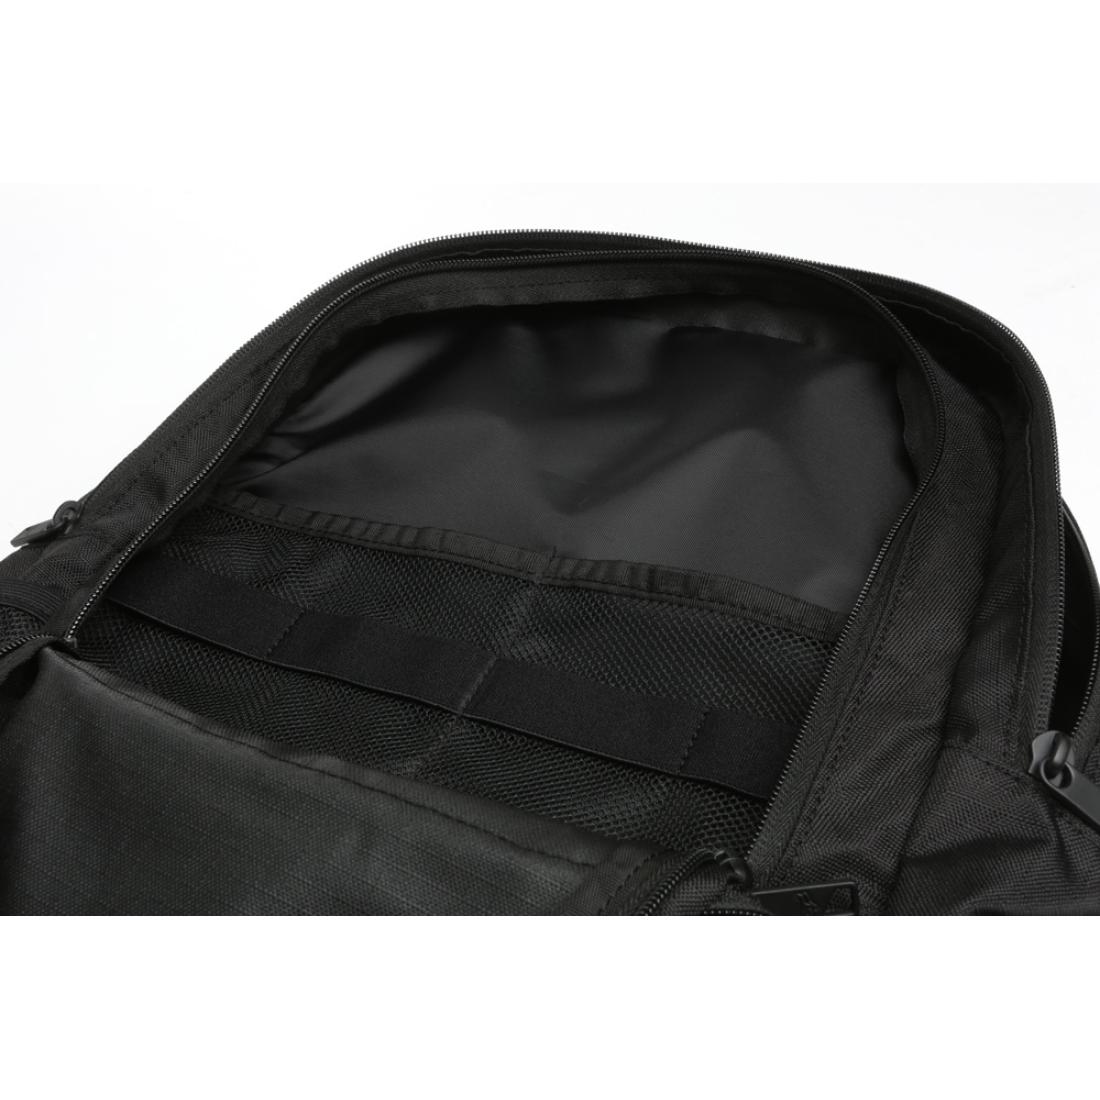 Compliance Lock Up Backpack Black